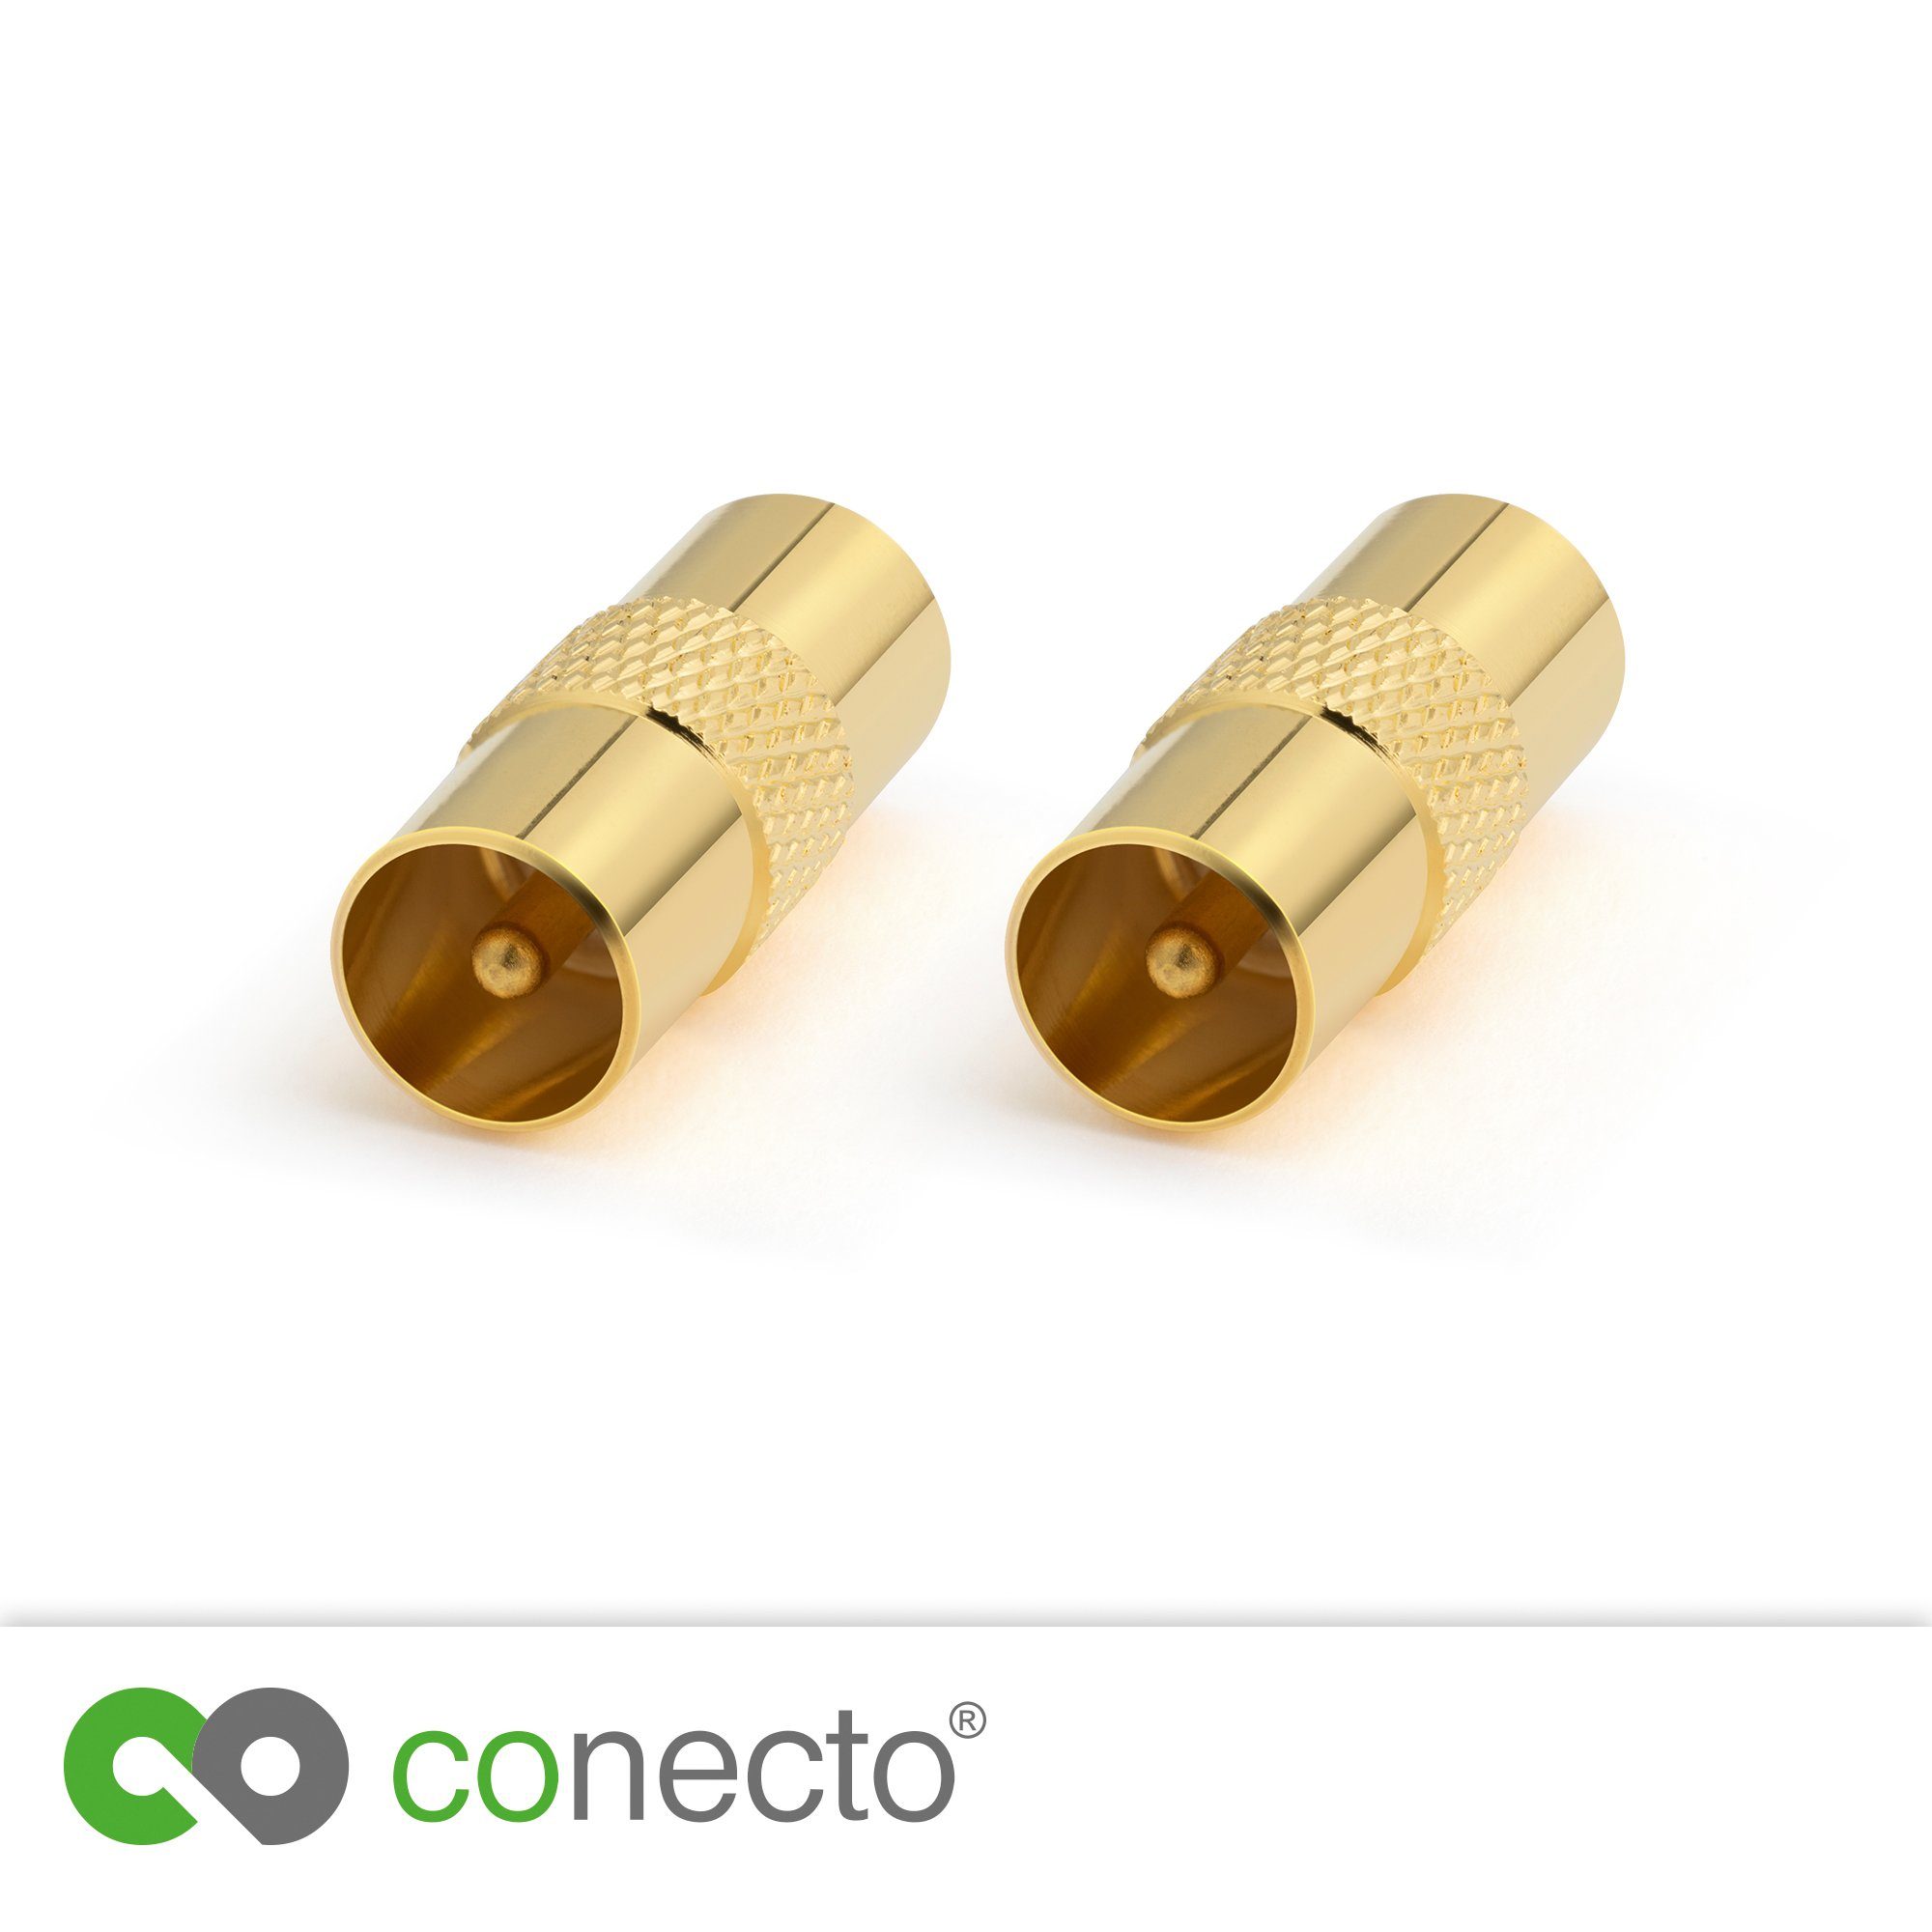 conecto Antennen-Adapter, auf zum Adapter IEC-Stecker IEC-Stecker, conecto SAT-Kabel